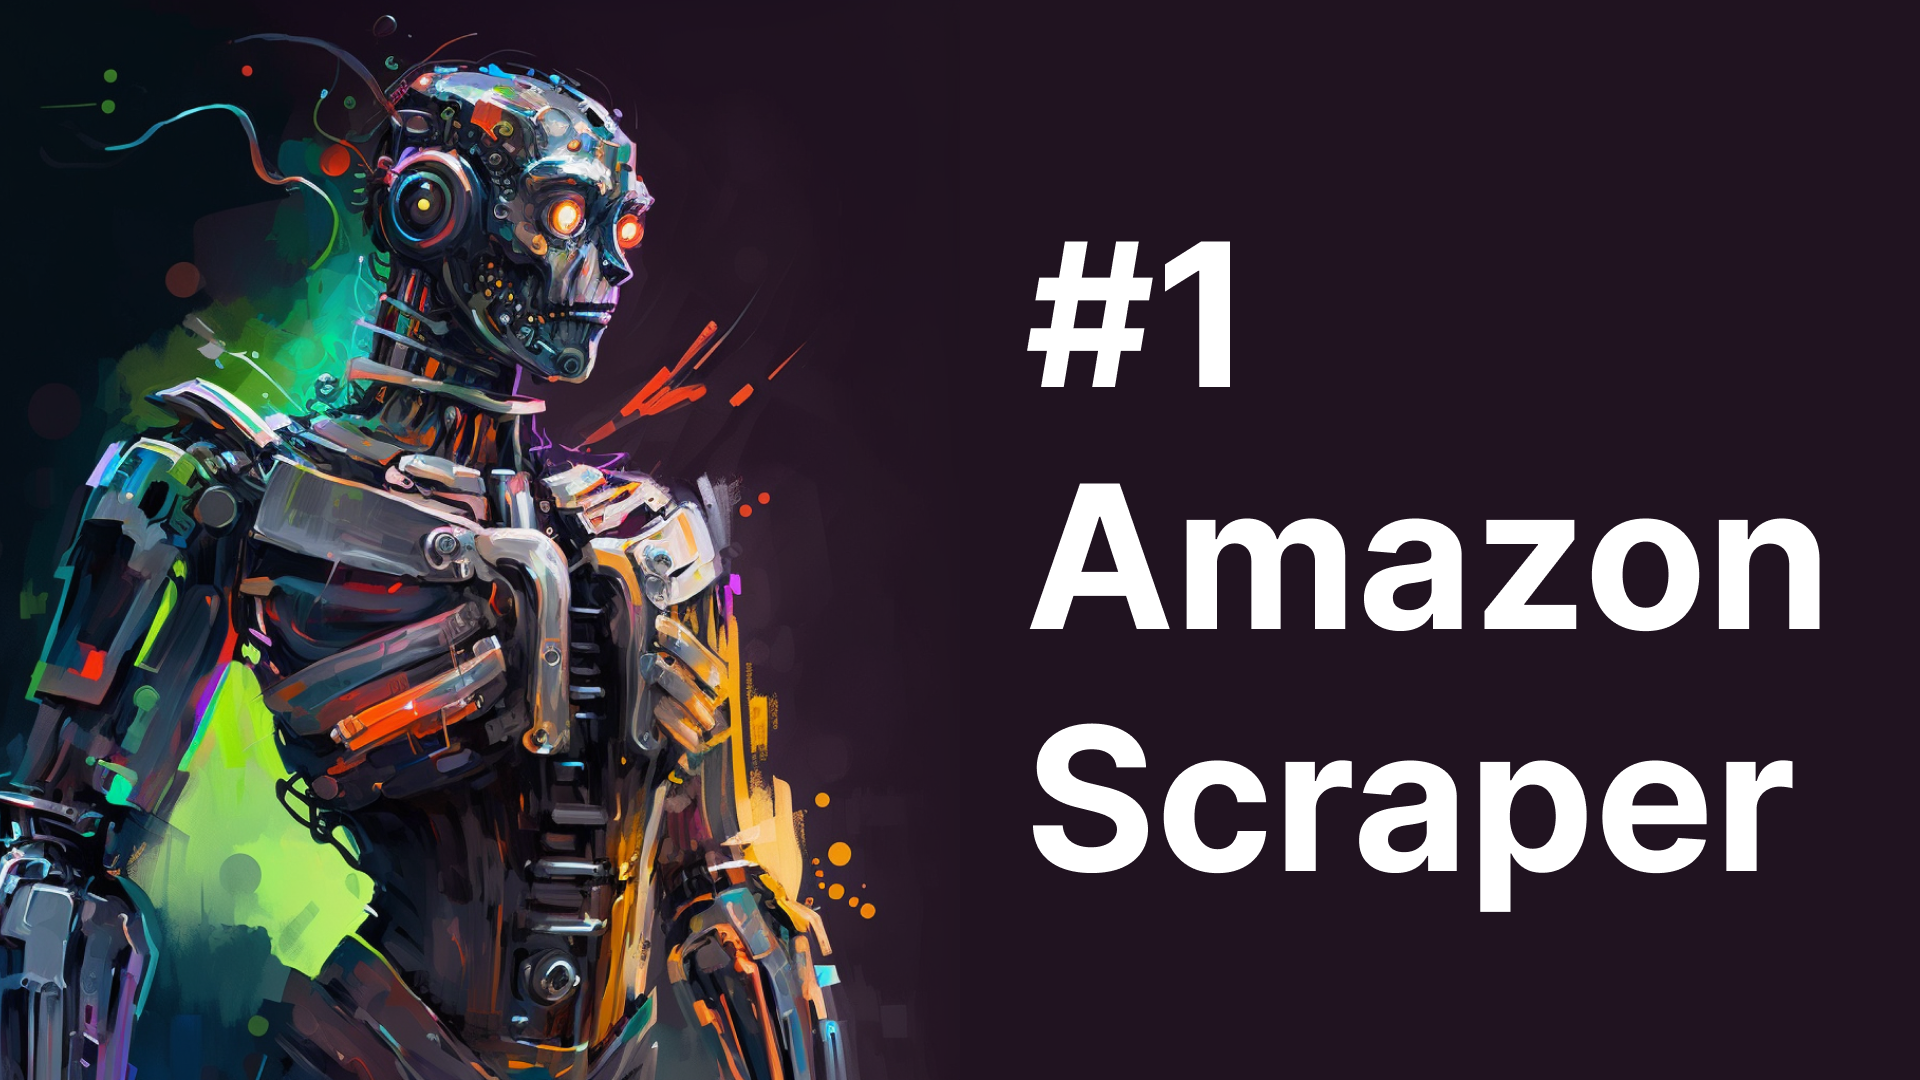 Amazon Scraper Featured Image